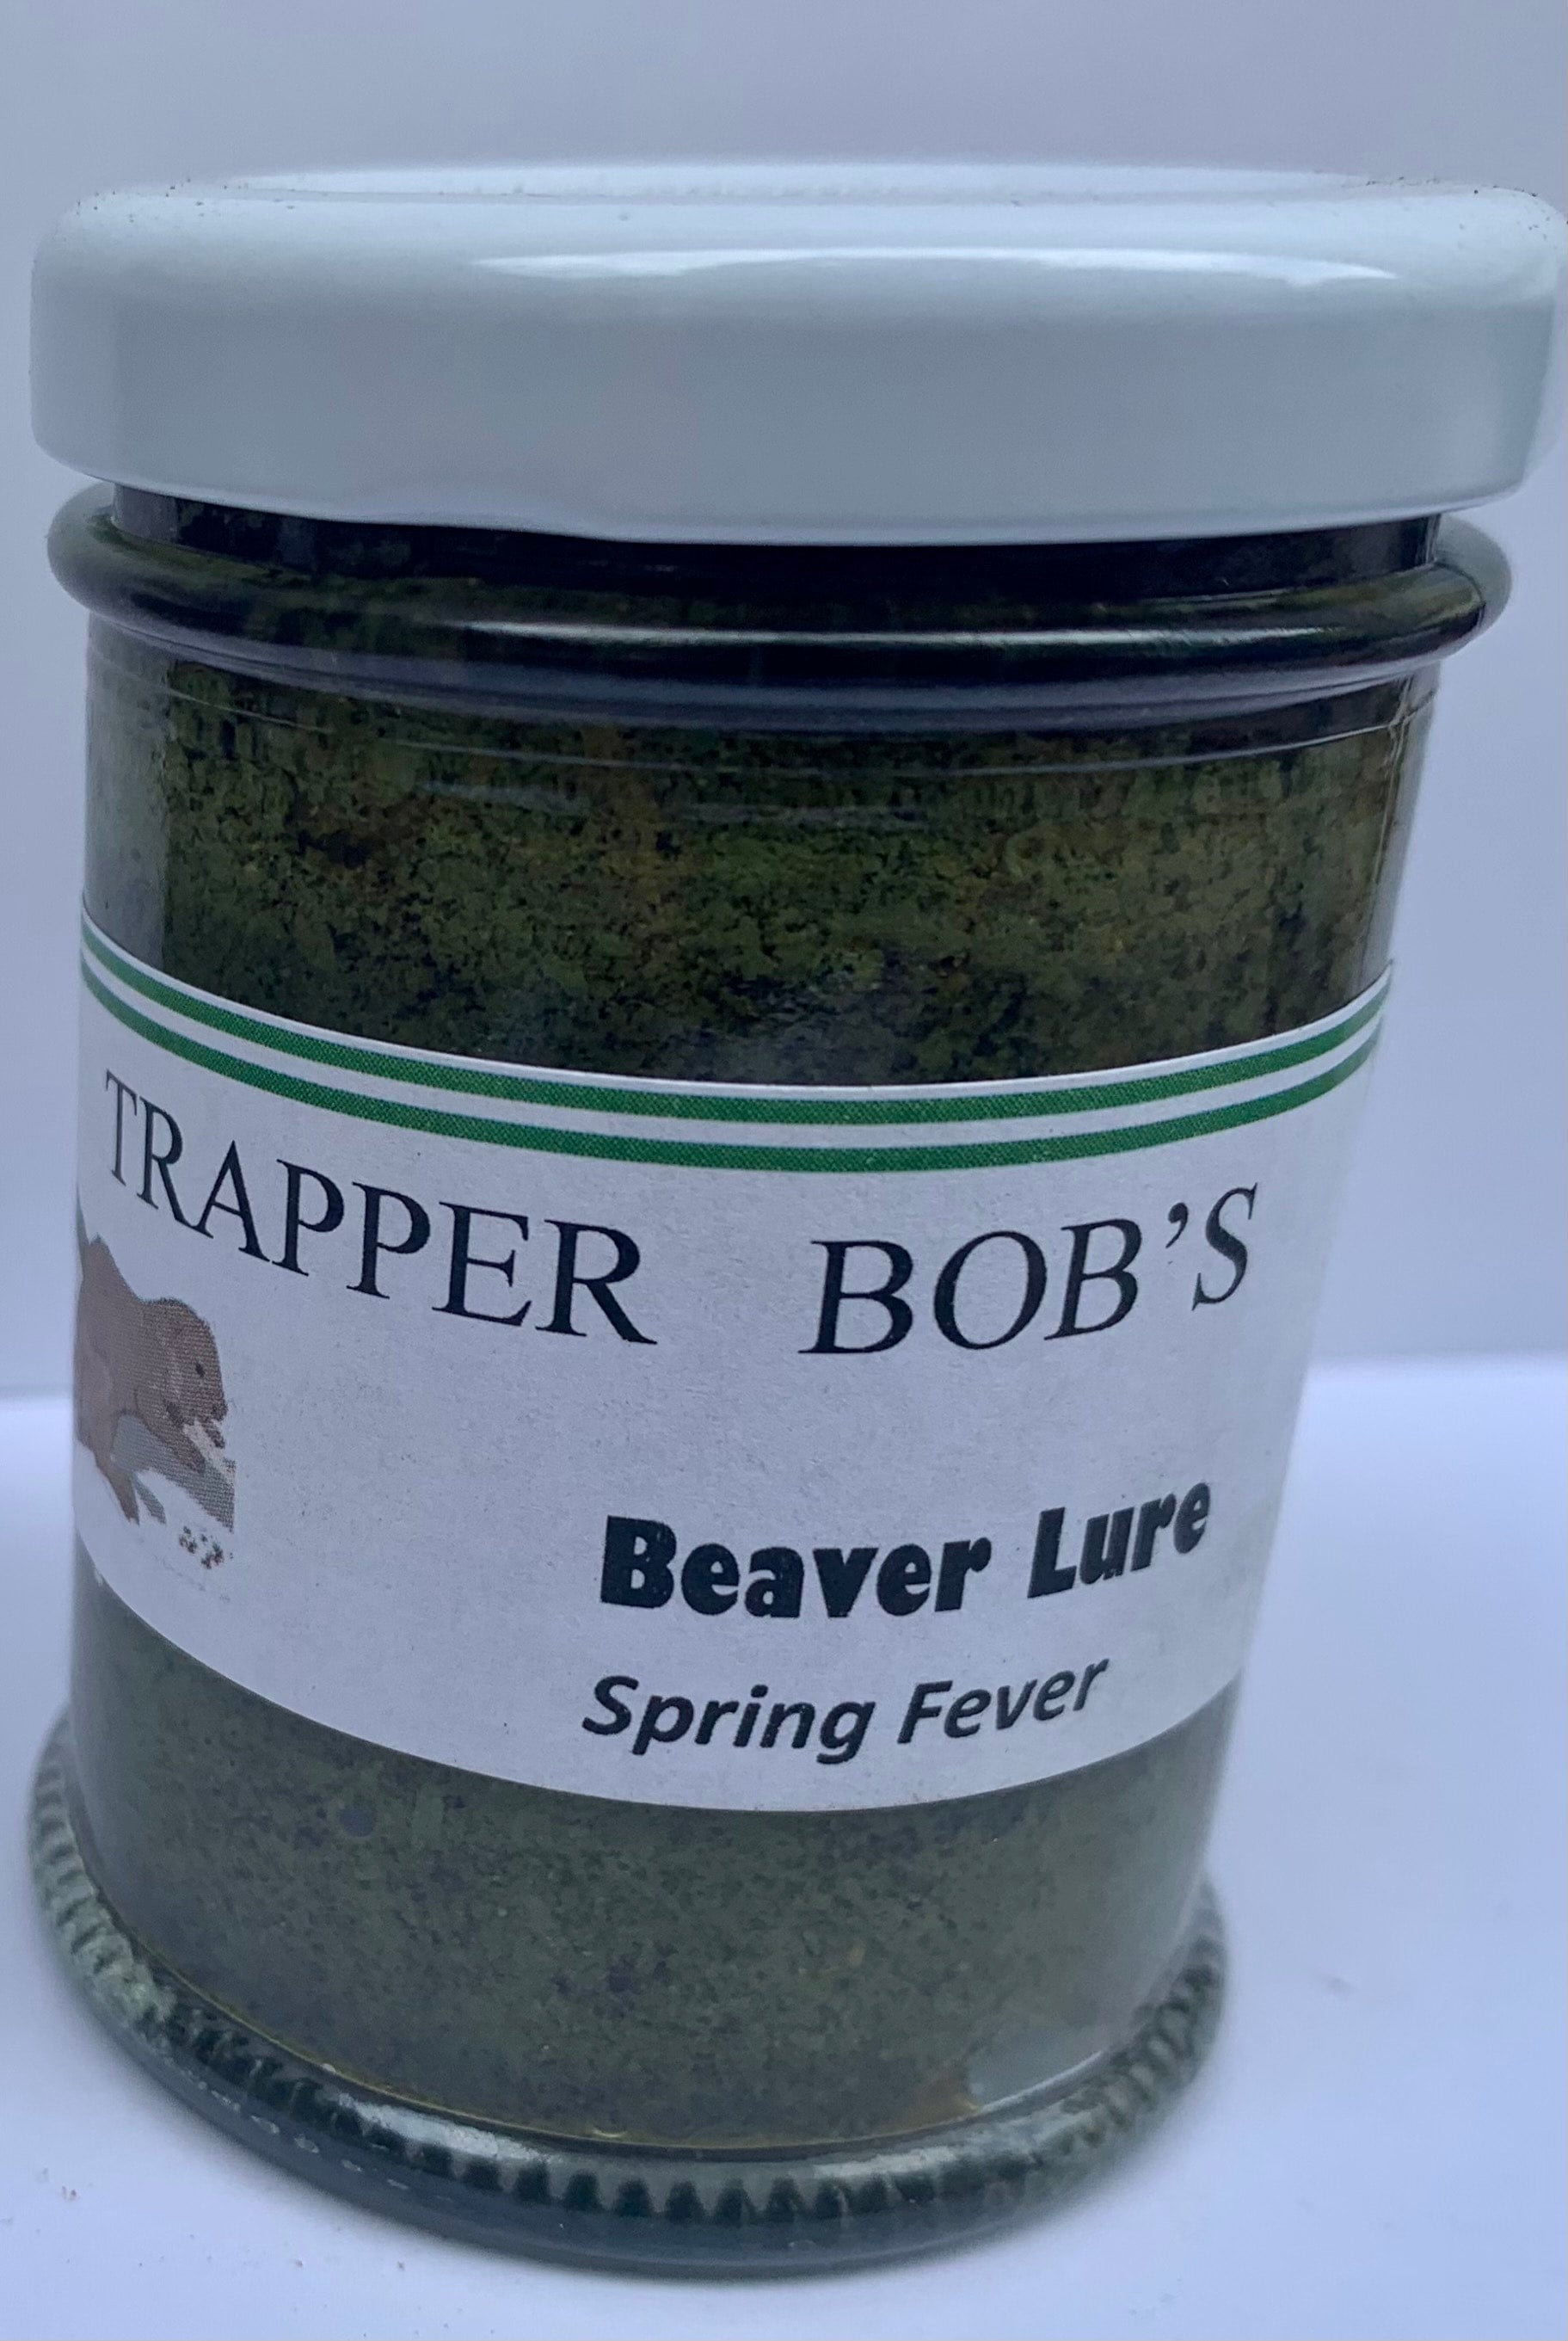 Trapper Bob's Spring Fever Beaver Lure